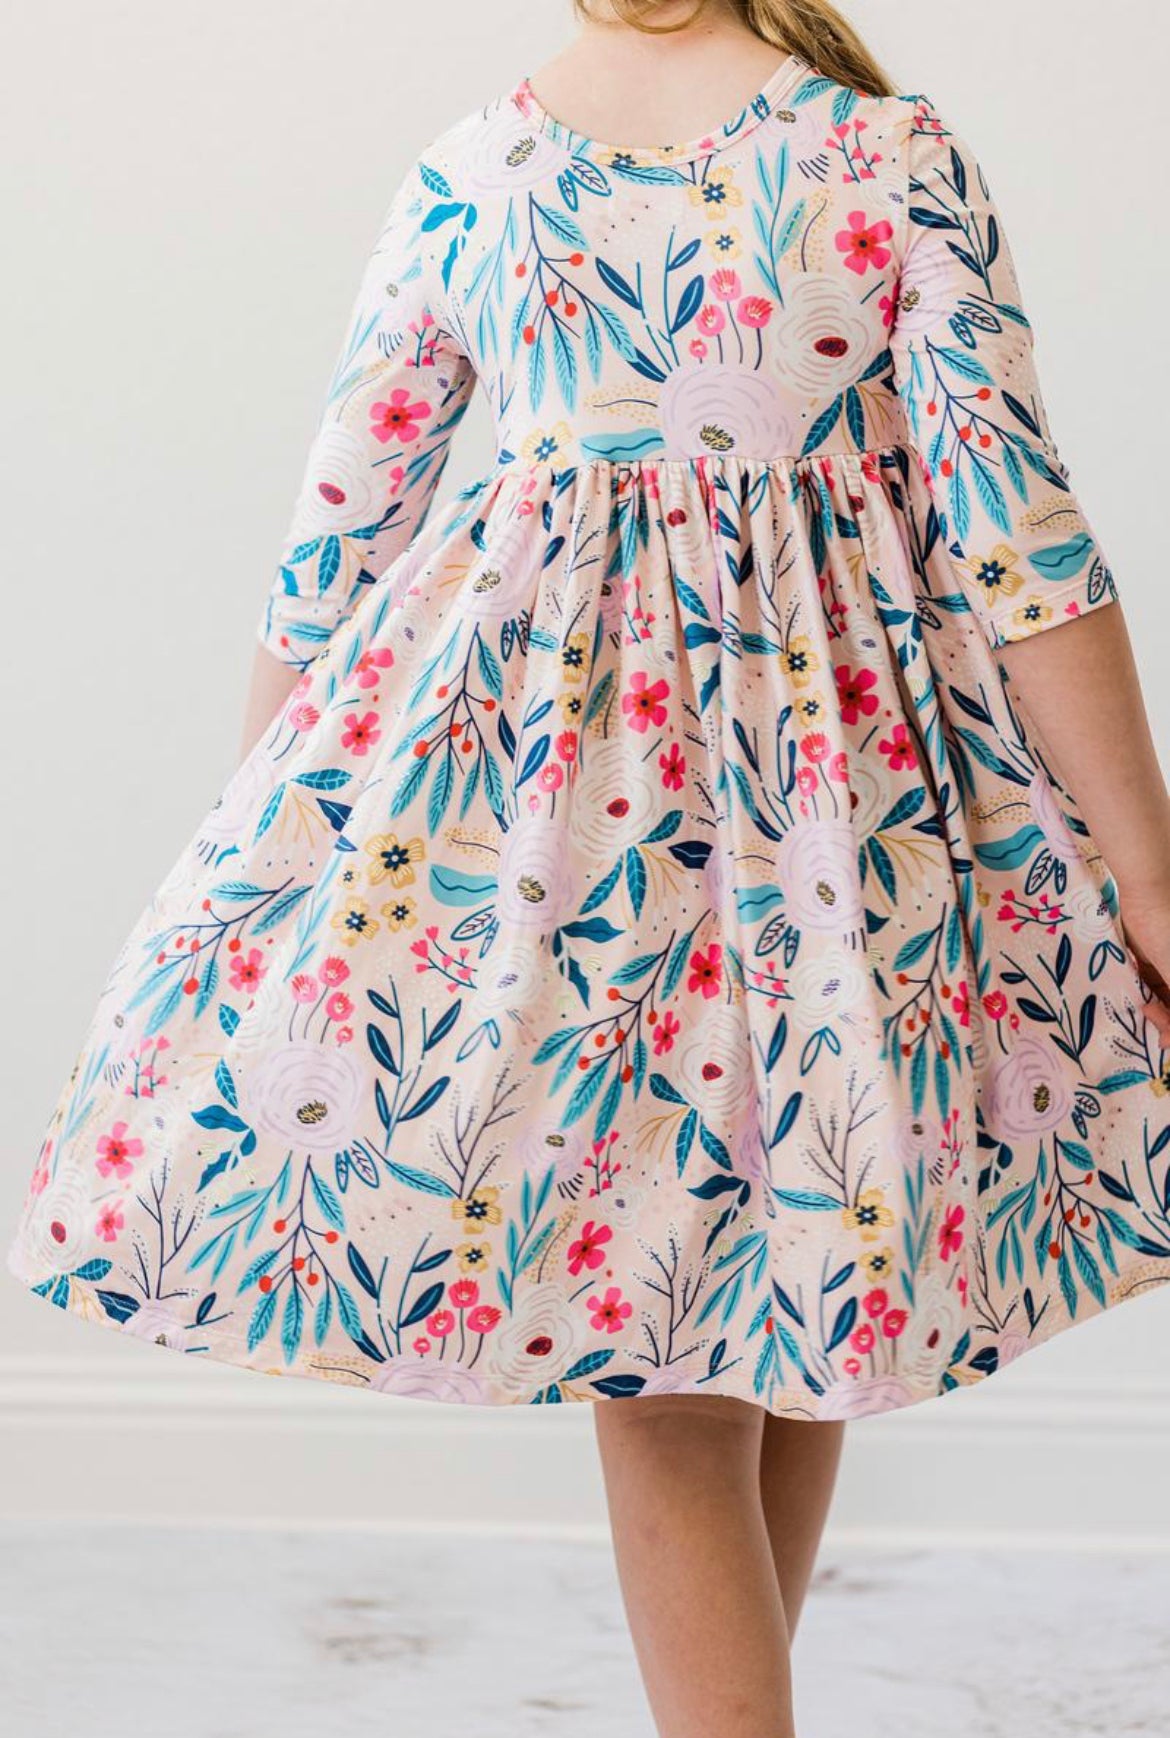 Whimsy Twirl Dress